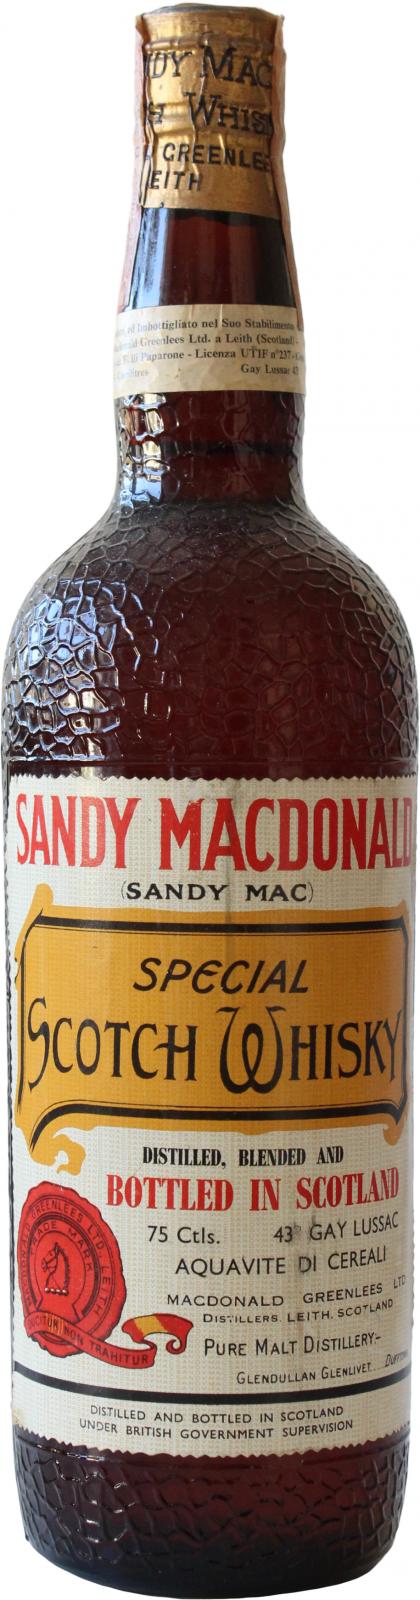 Sandy Macdonald Special Scotch Whisky 43% 750ml